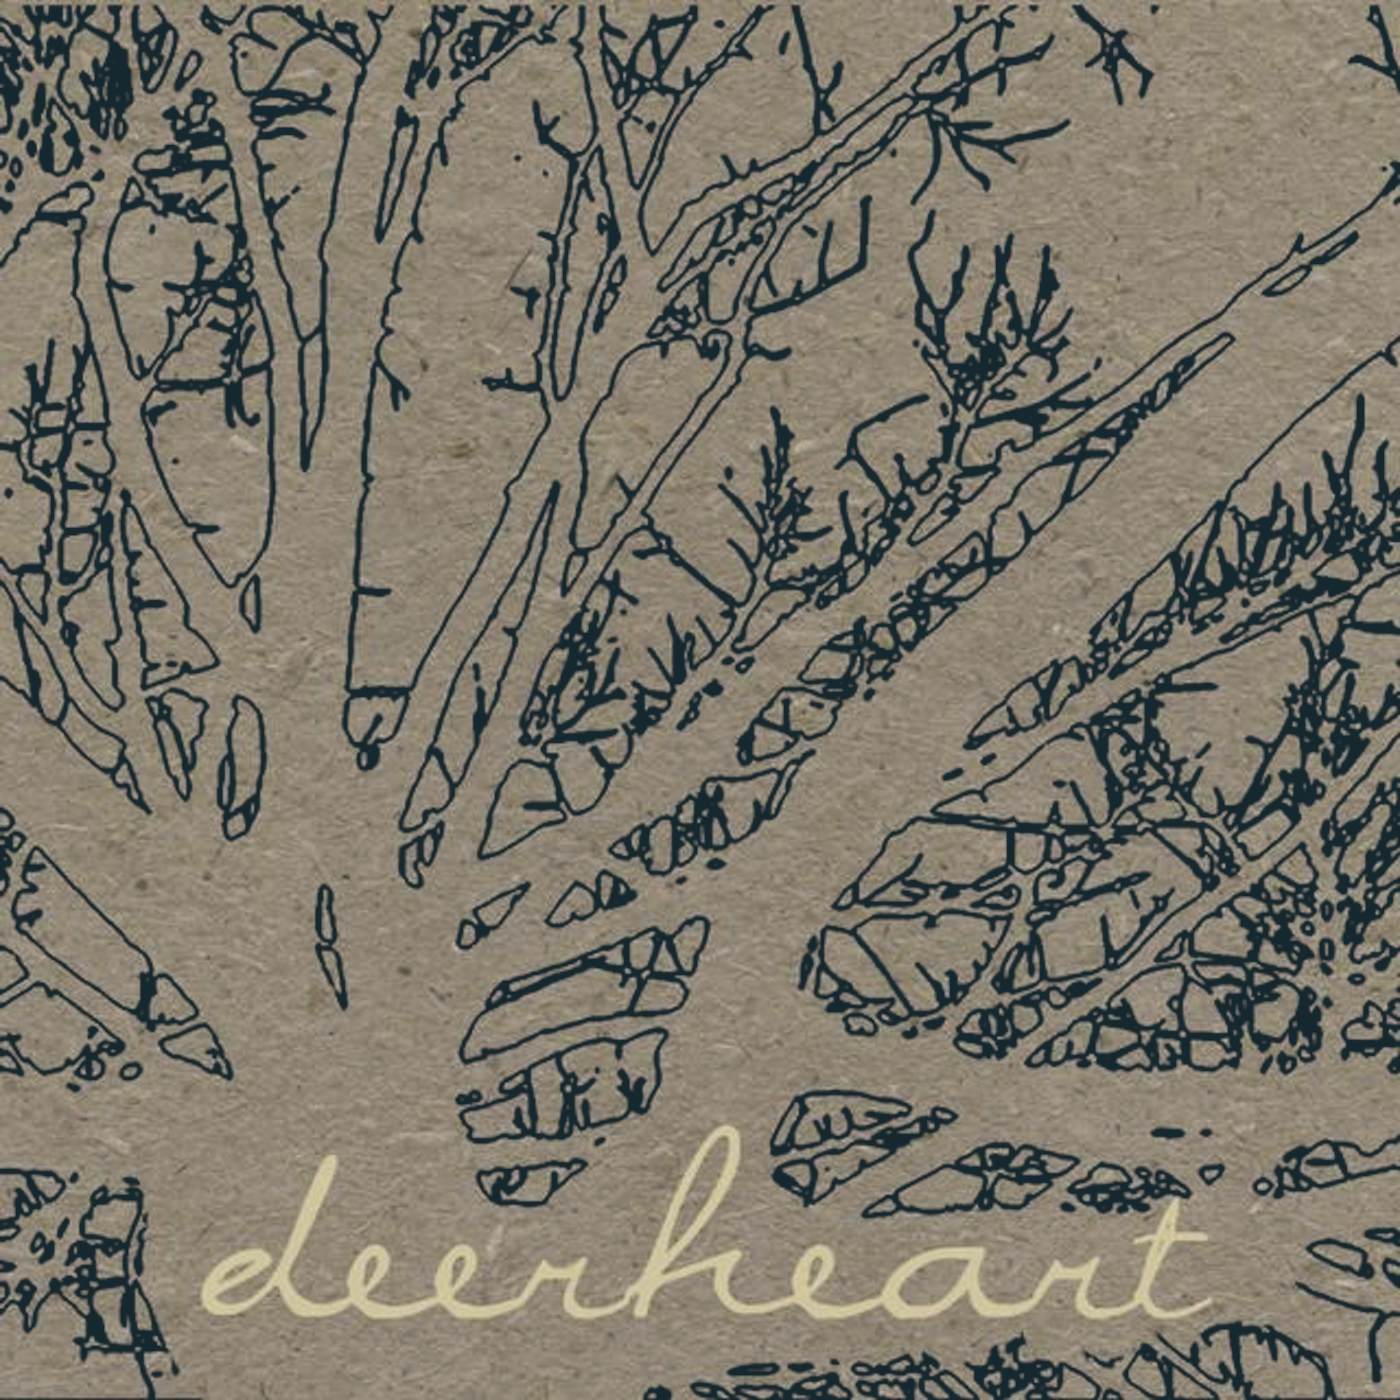 Deerheart